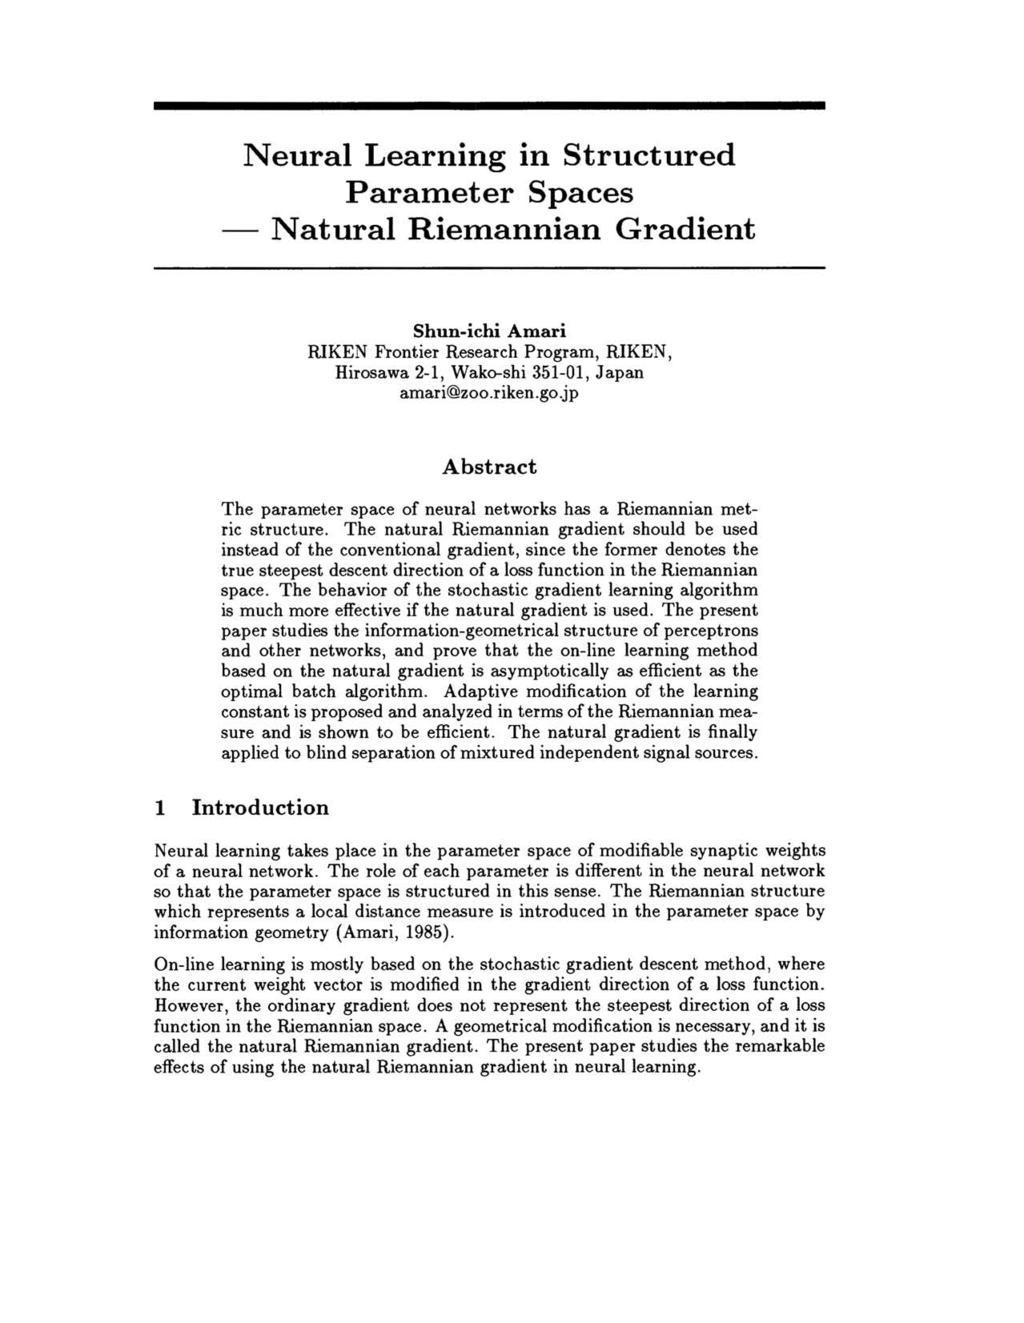 Neural Learning in Structured Parameter Spaces Natural Riemannian Gradient Shun-ichi Amari RIKEN Frontier Research Program, RIKEN, Hirosawa 2-1, Wako-shi 351-01, Japan amari@zoo.riken.go.